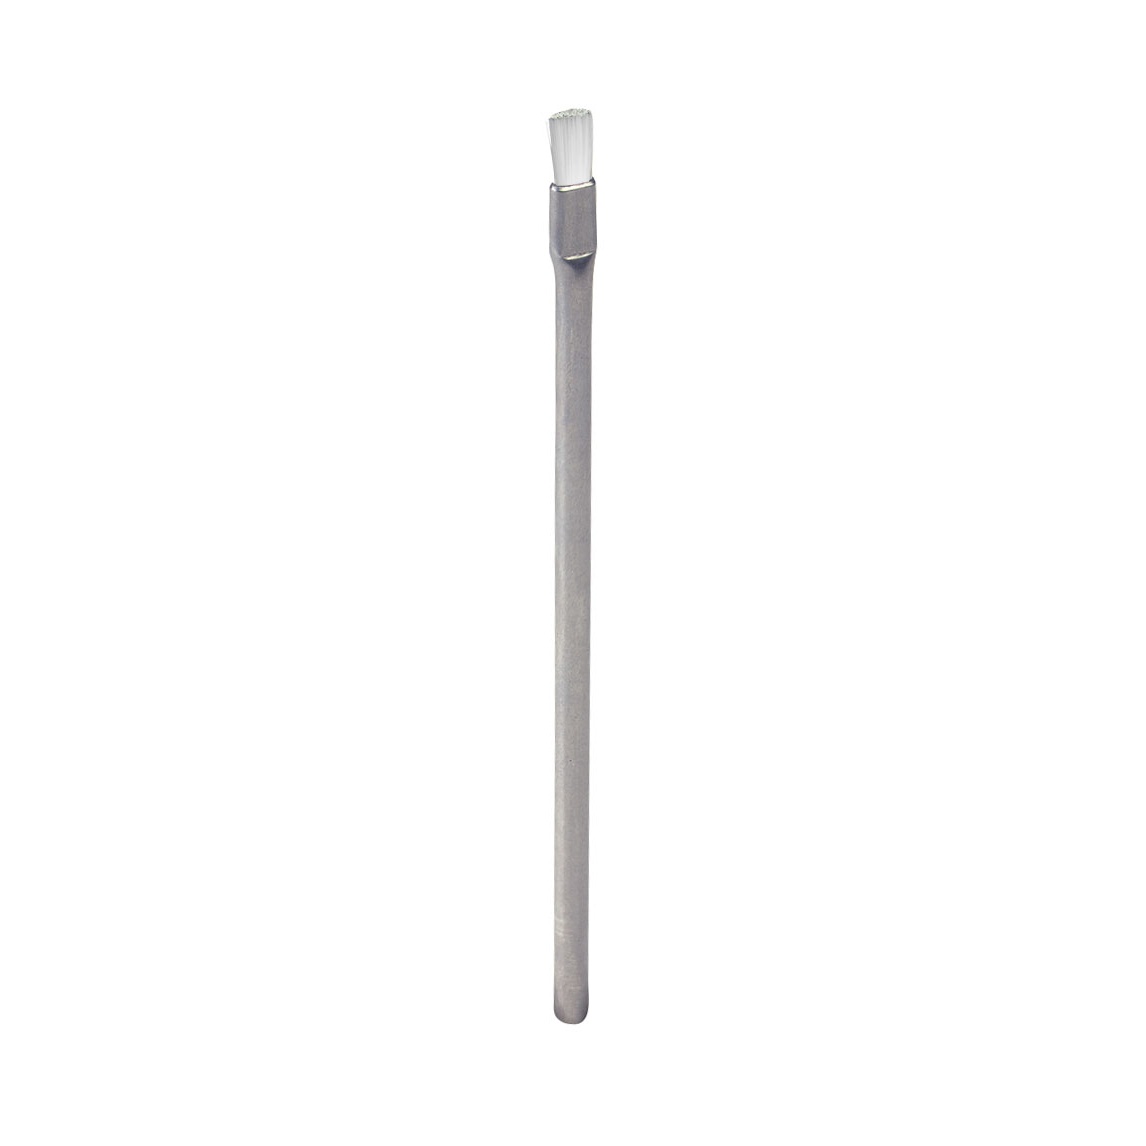 Applicator Brush — 0.008" Polypropylene Bristle / 3/16" Diameter Stainless Steel Tube Handle 1